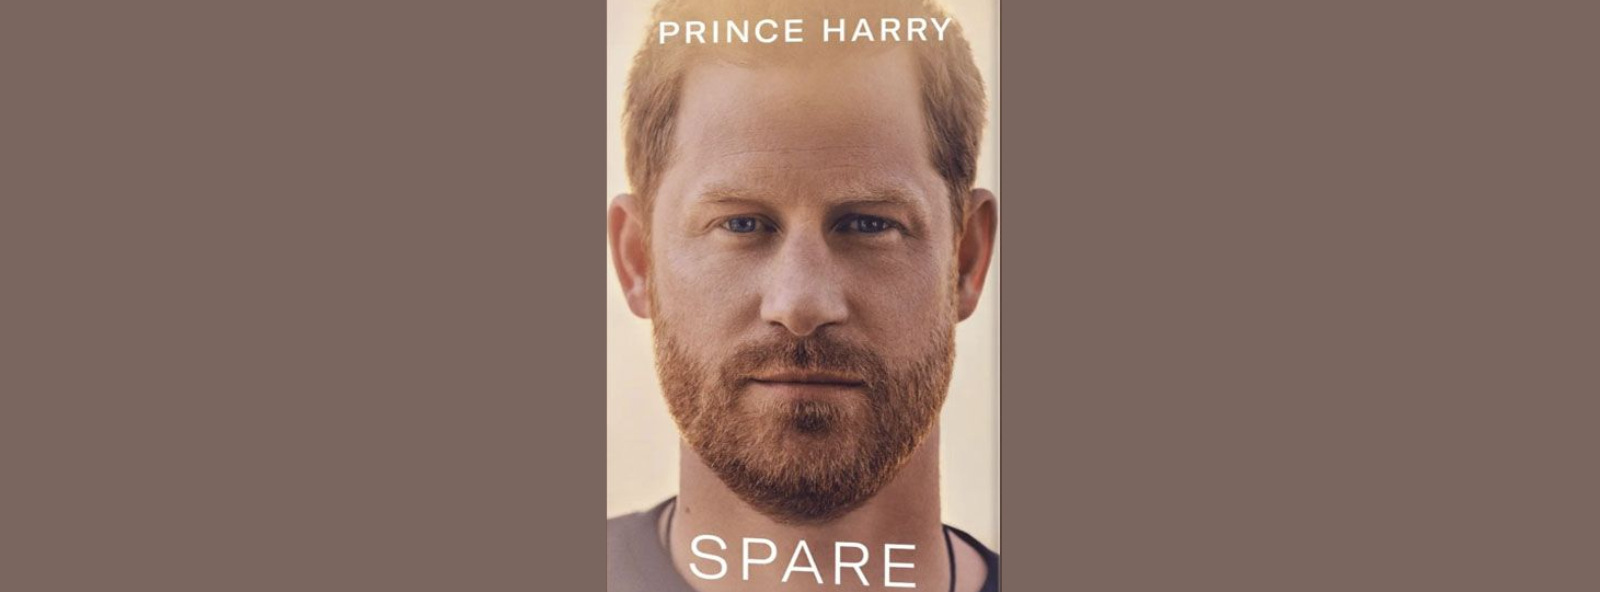 spare-prince-harry